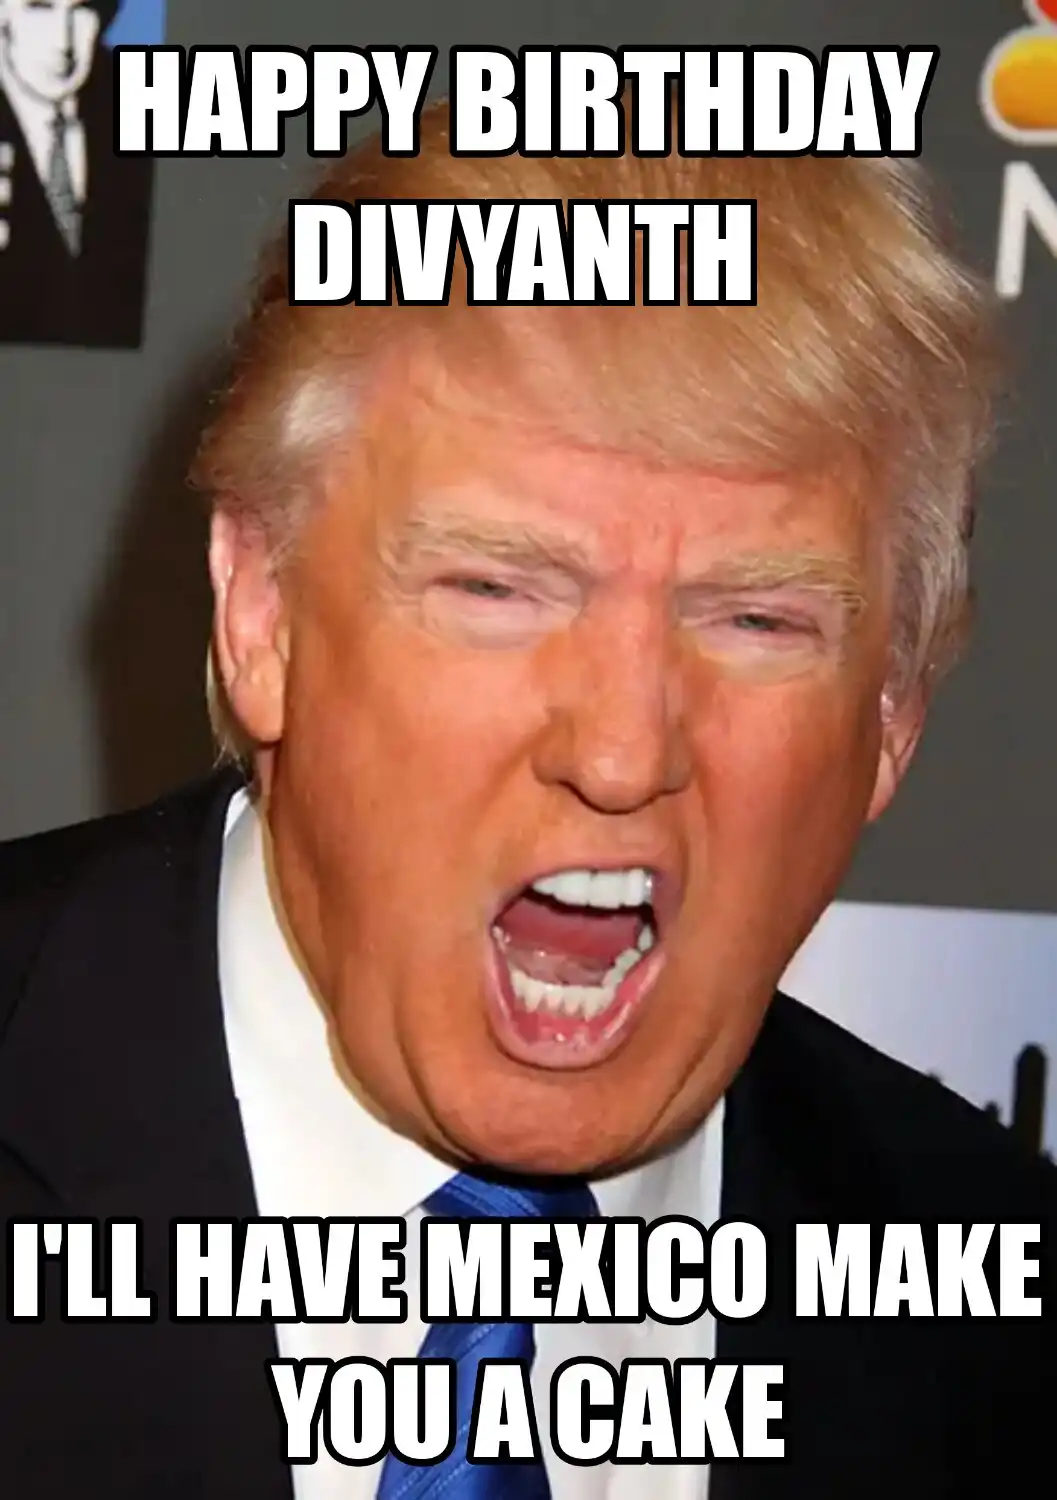 Happy Birthday Divyanth Mexico Make You A Cake Meme